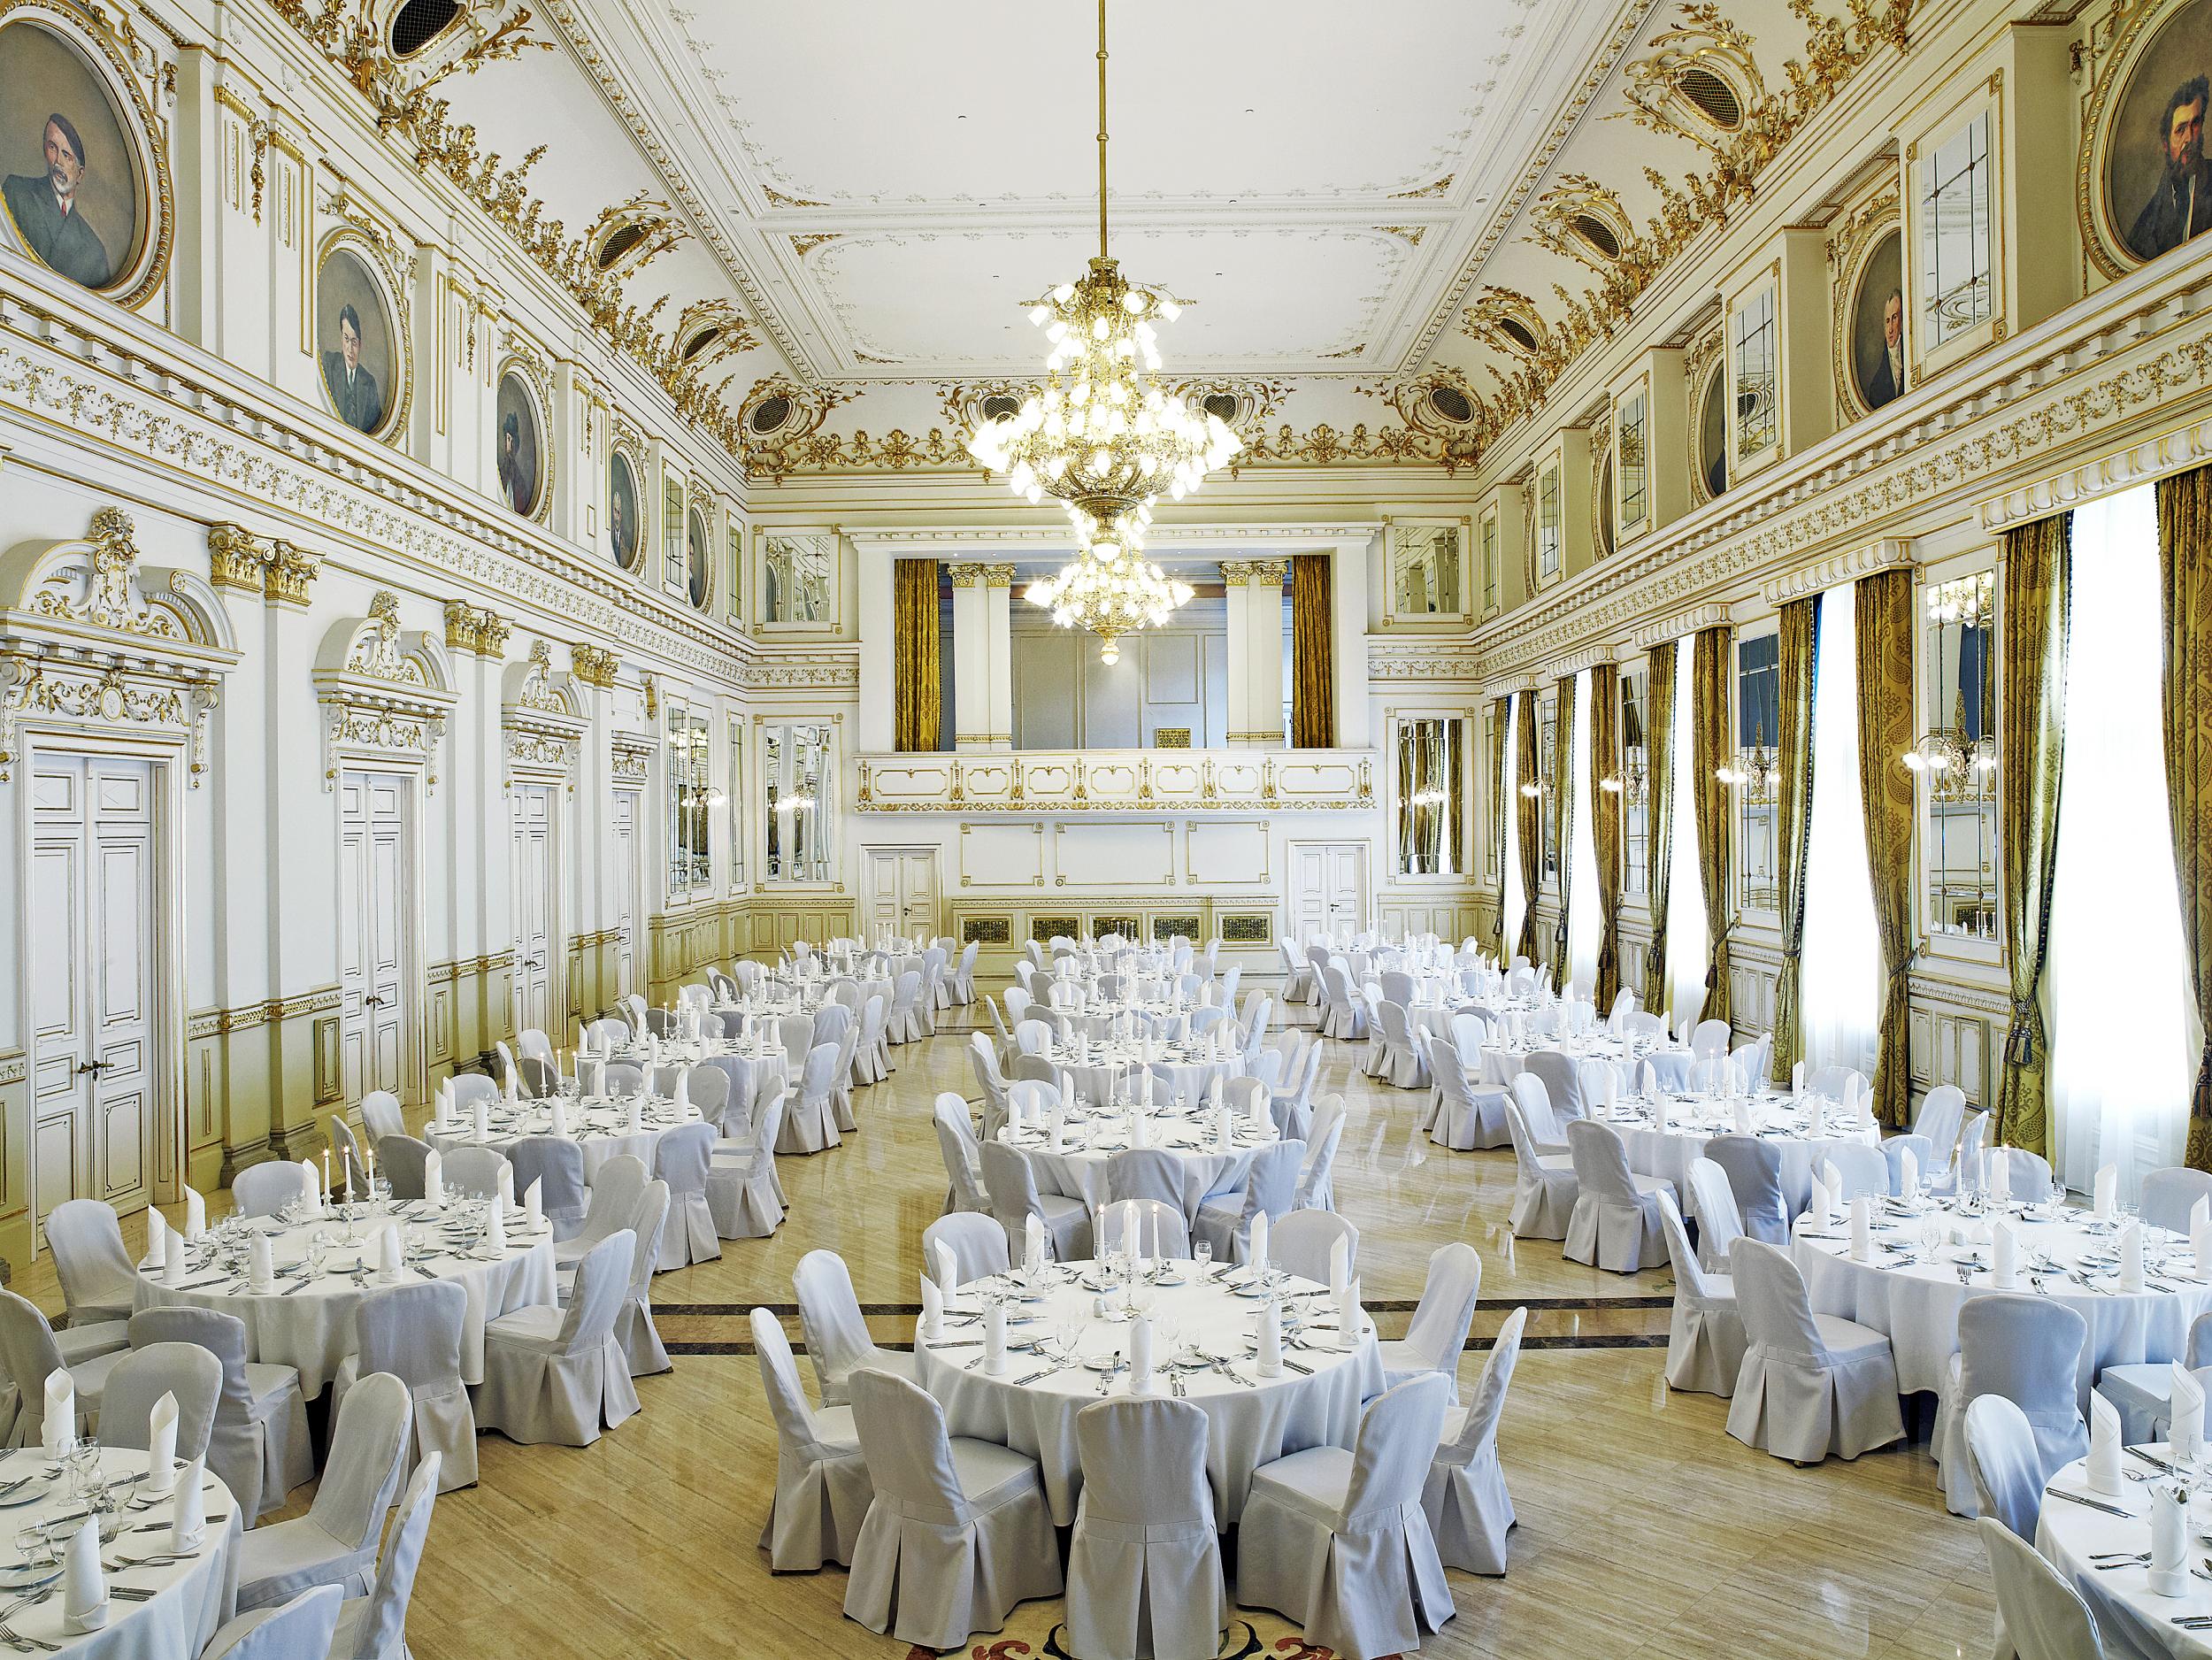 The 120-year-old Grand Ballroom at Corinthia Hotel